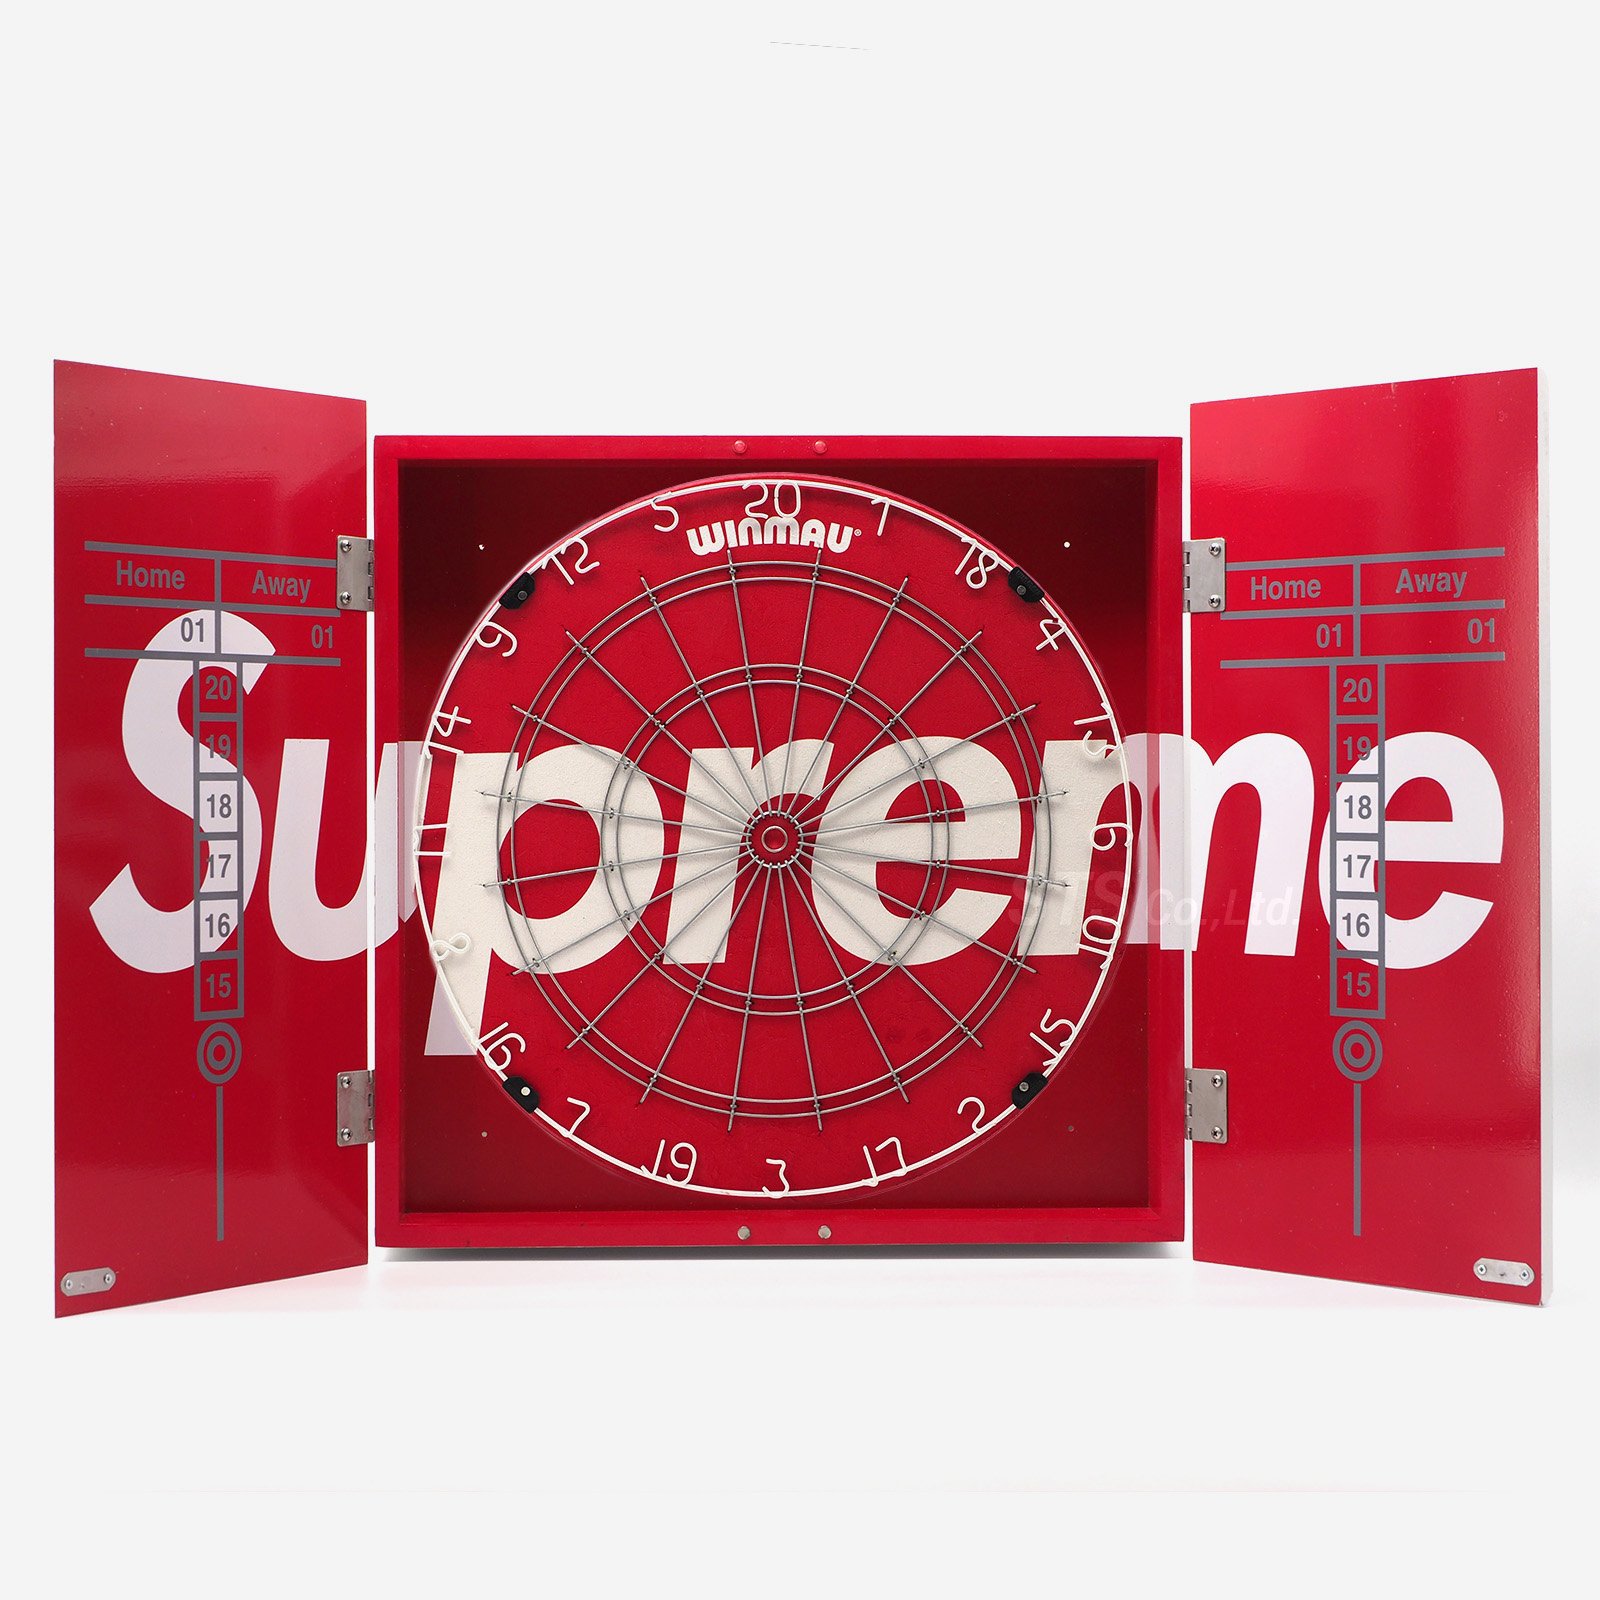 Supreme/Winmau Dartboard Set | イギリスの老舗ダーツメーカーWinmau